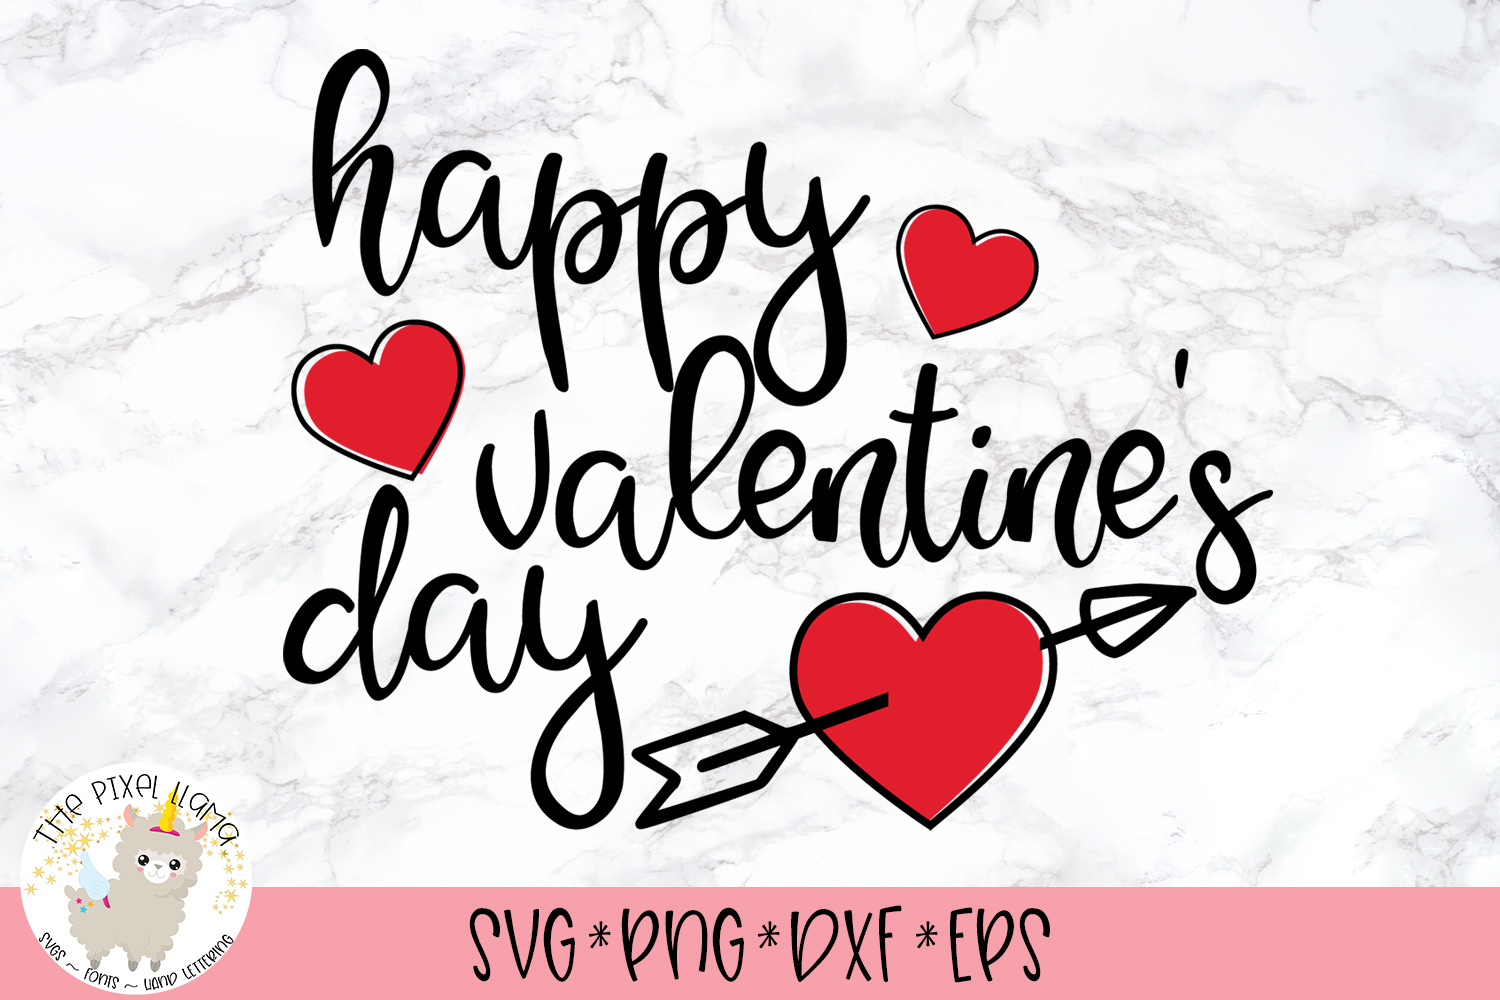 Happy Valentine's Day SVG Cut File